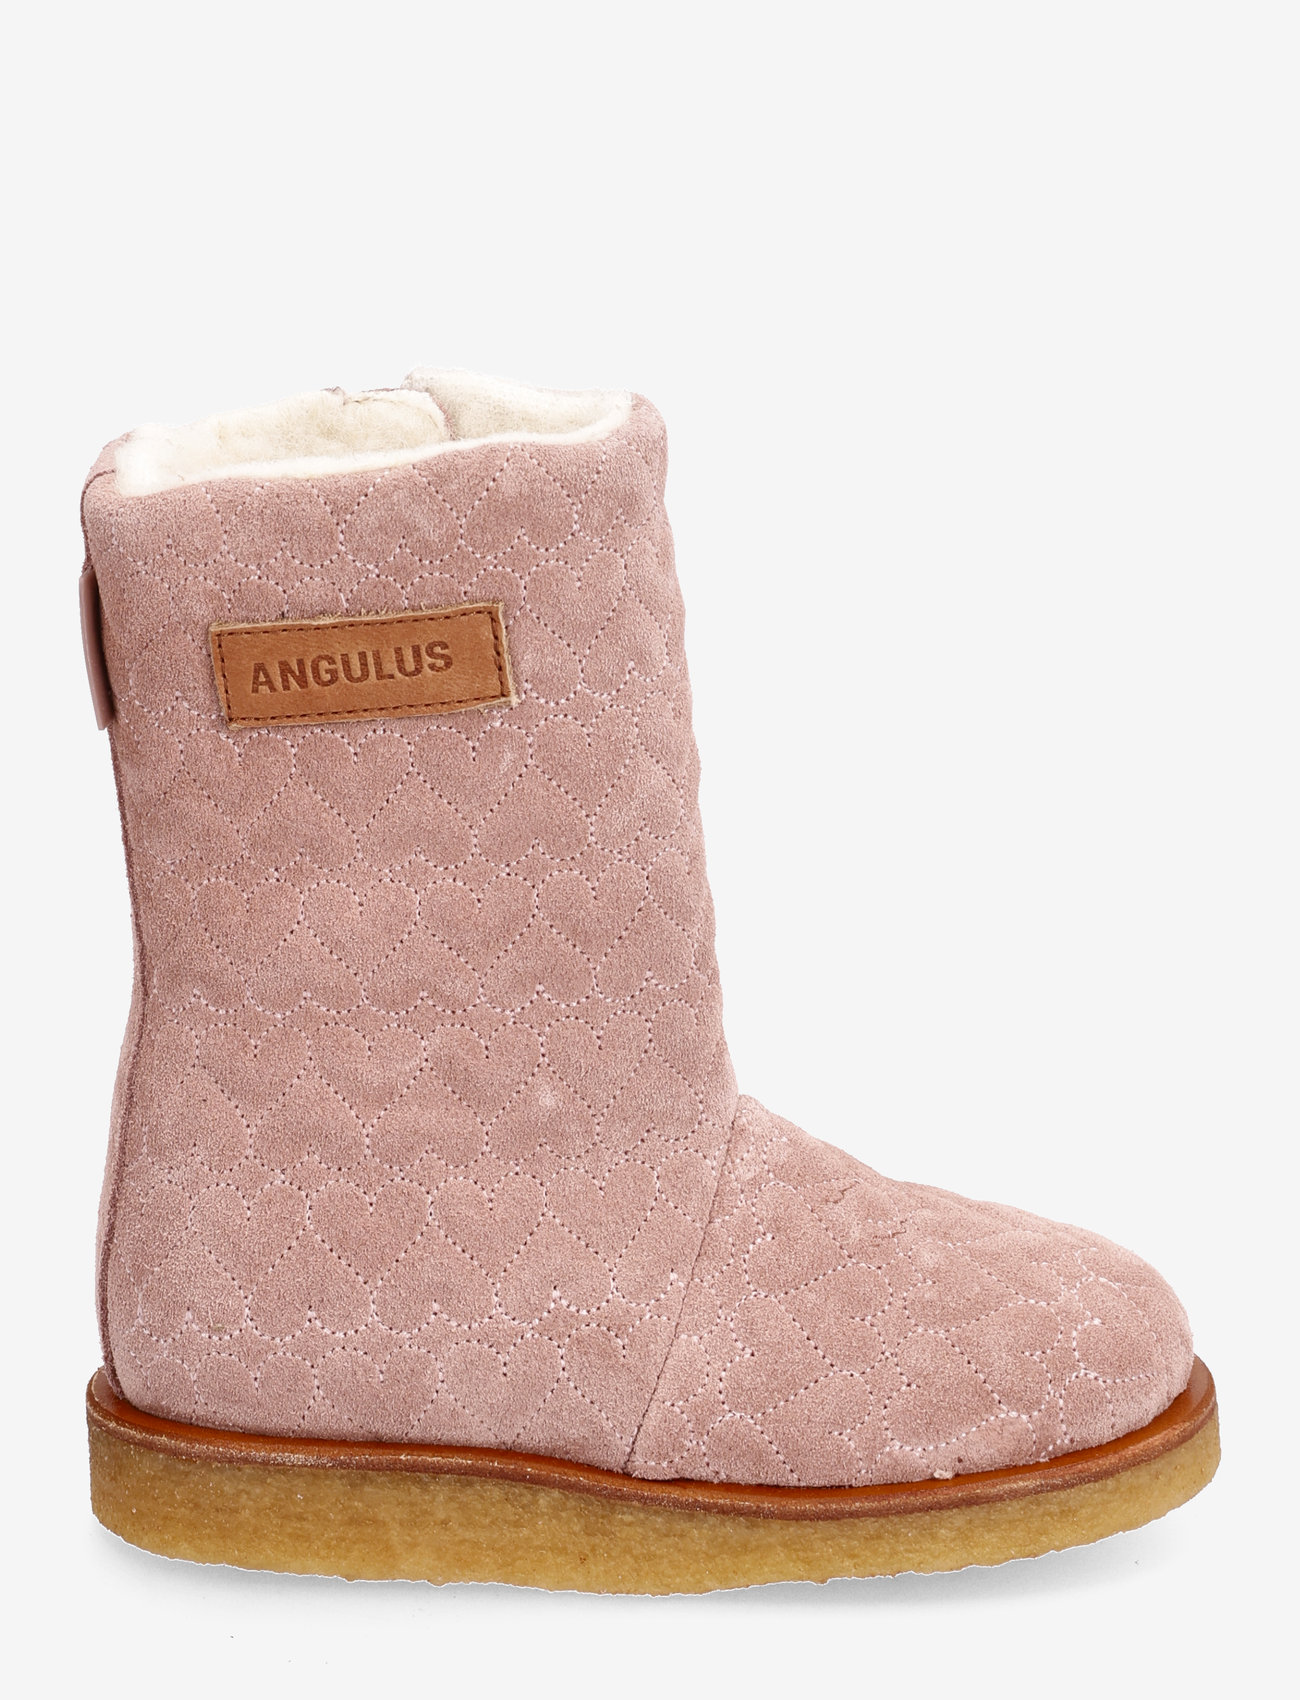 ANGULUS - Boots - flat - with zipper - kinder - 1773/1789 pale rose/cognac - 1